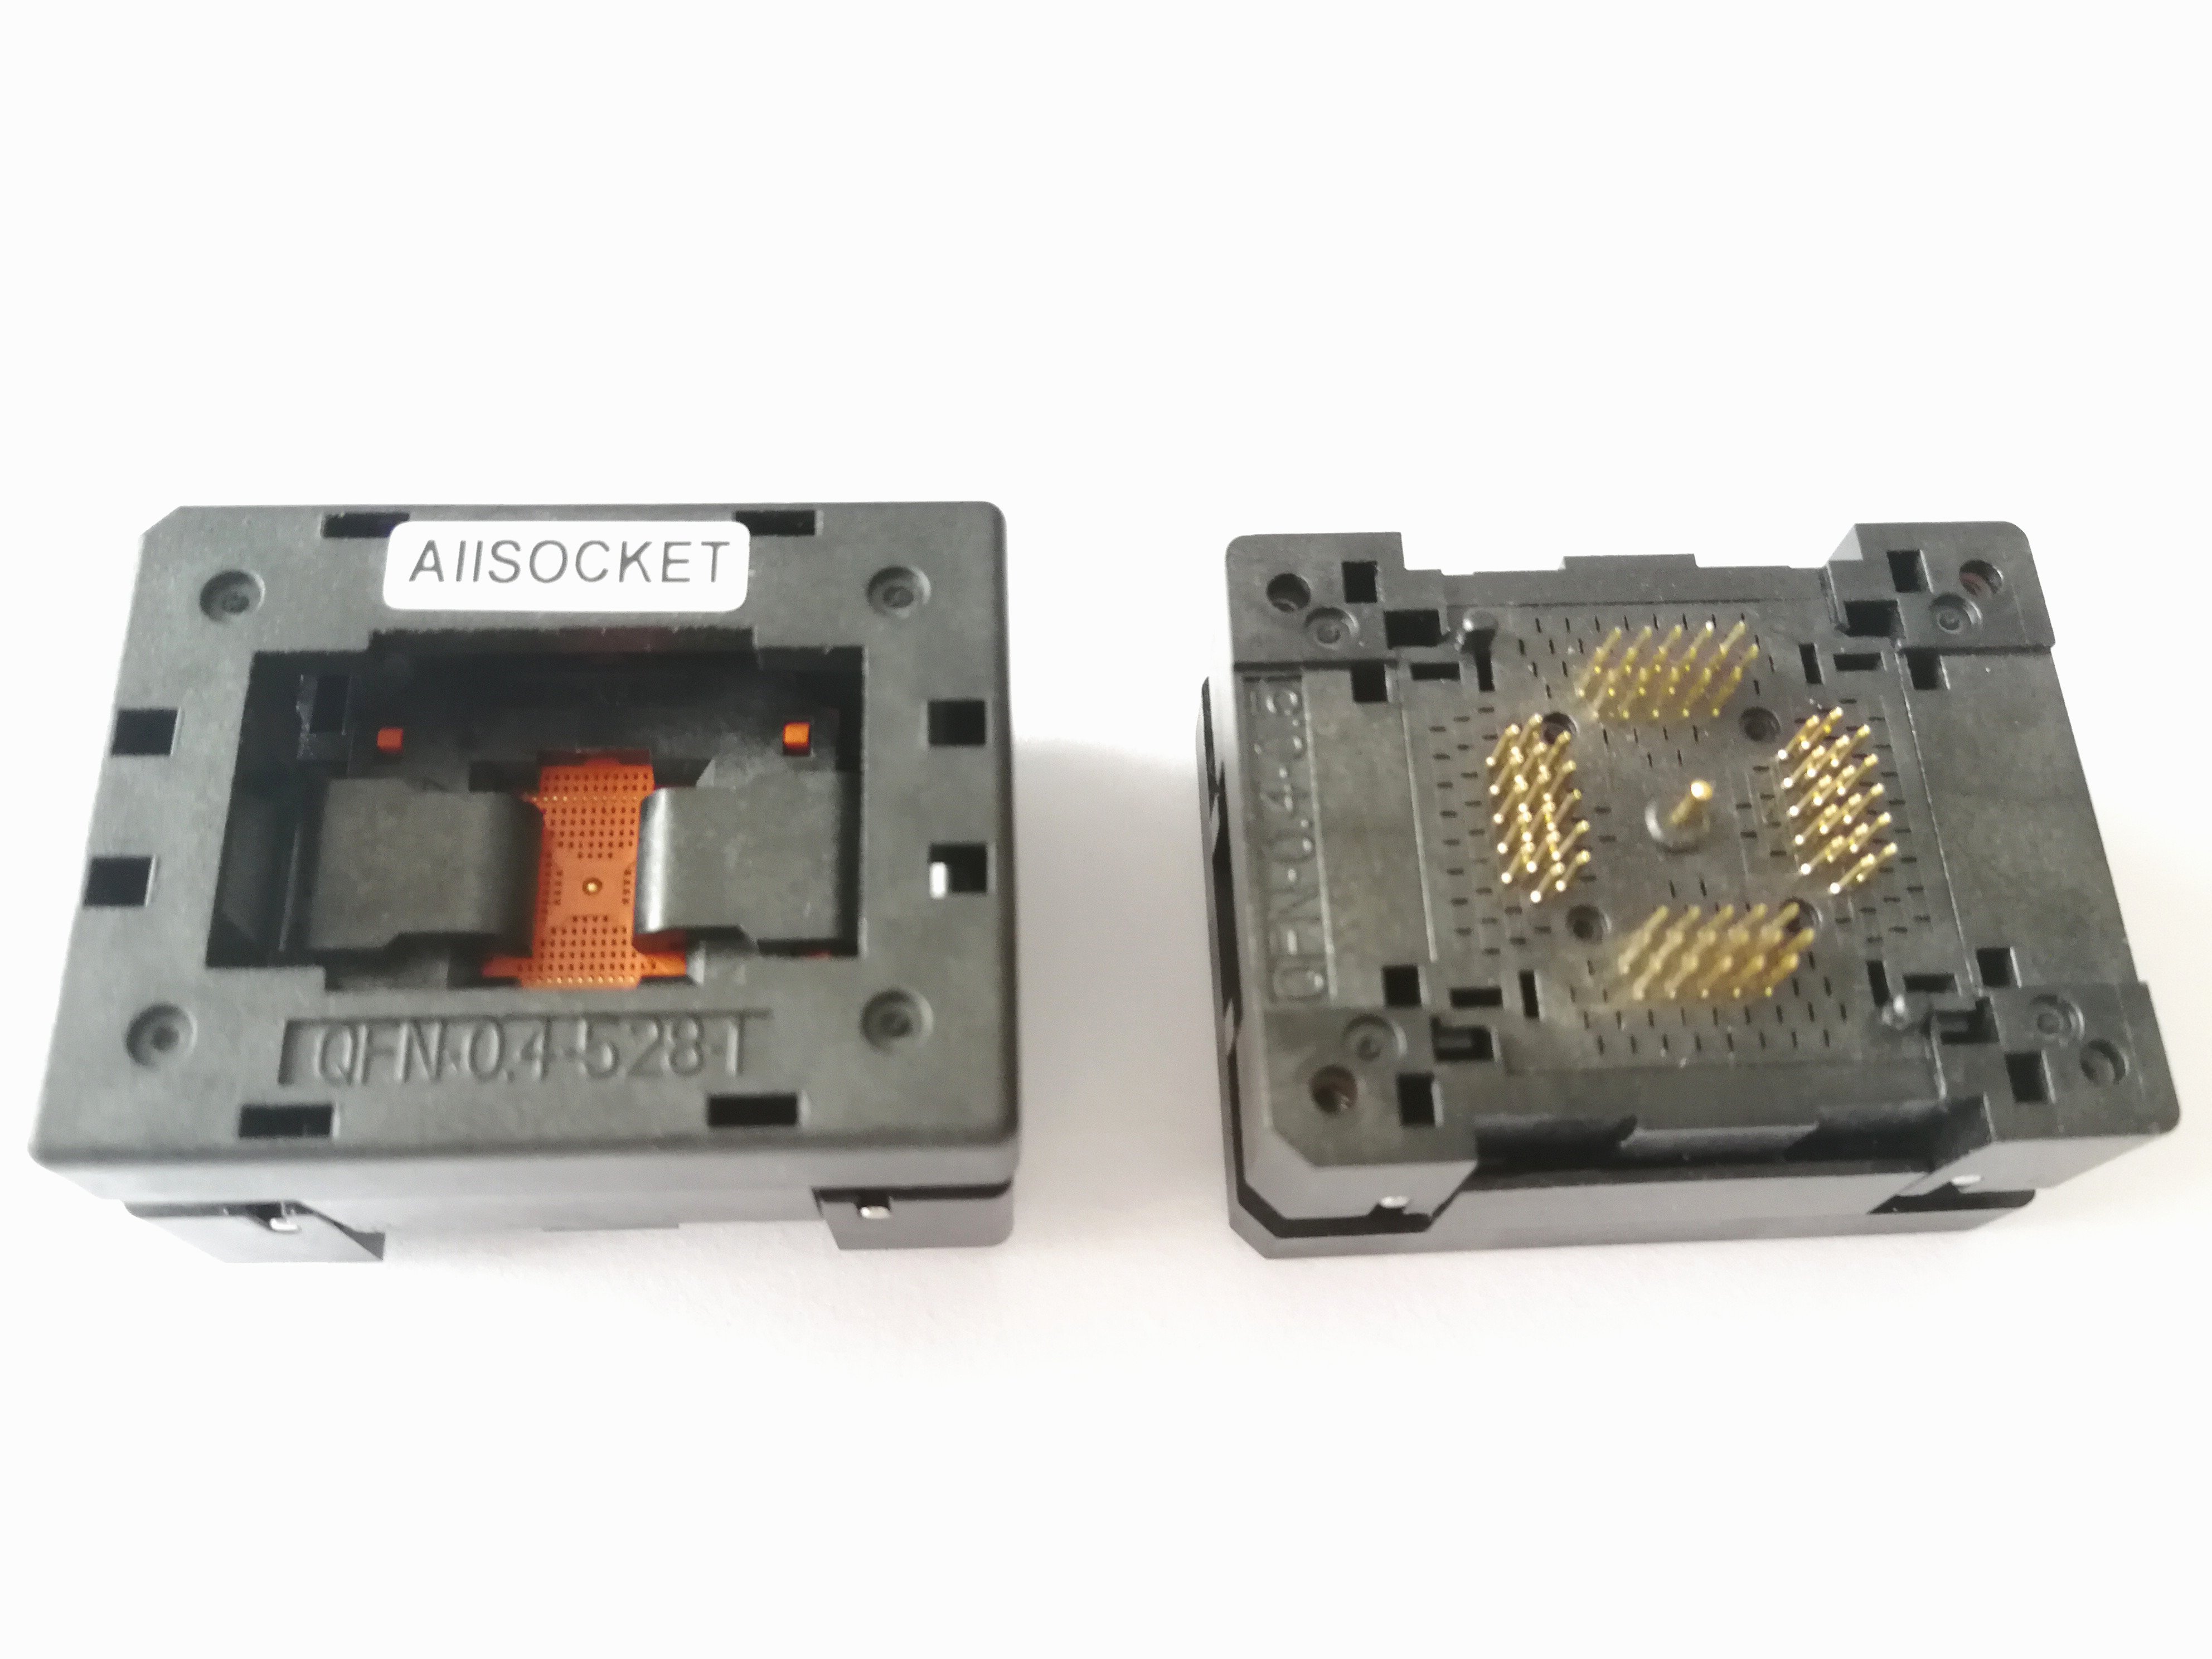 ALLSOCKET QFP48-0.5 Socket IC Burn-in Tesing Socket OTQ-48-0.5-01 0.5mm Pitch 7x7mm IC Dimension Open-top Socket Soldering Version QFP48-0.5-STP 